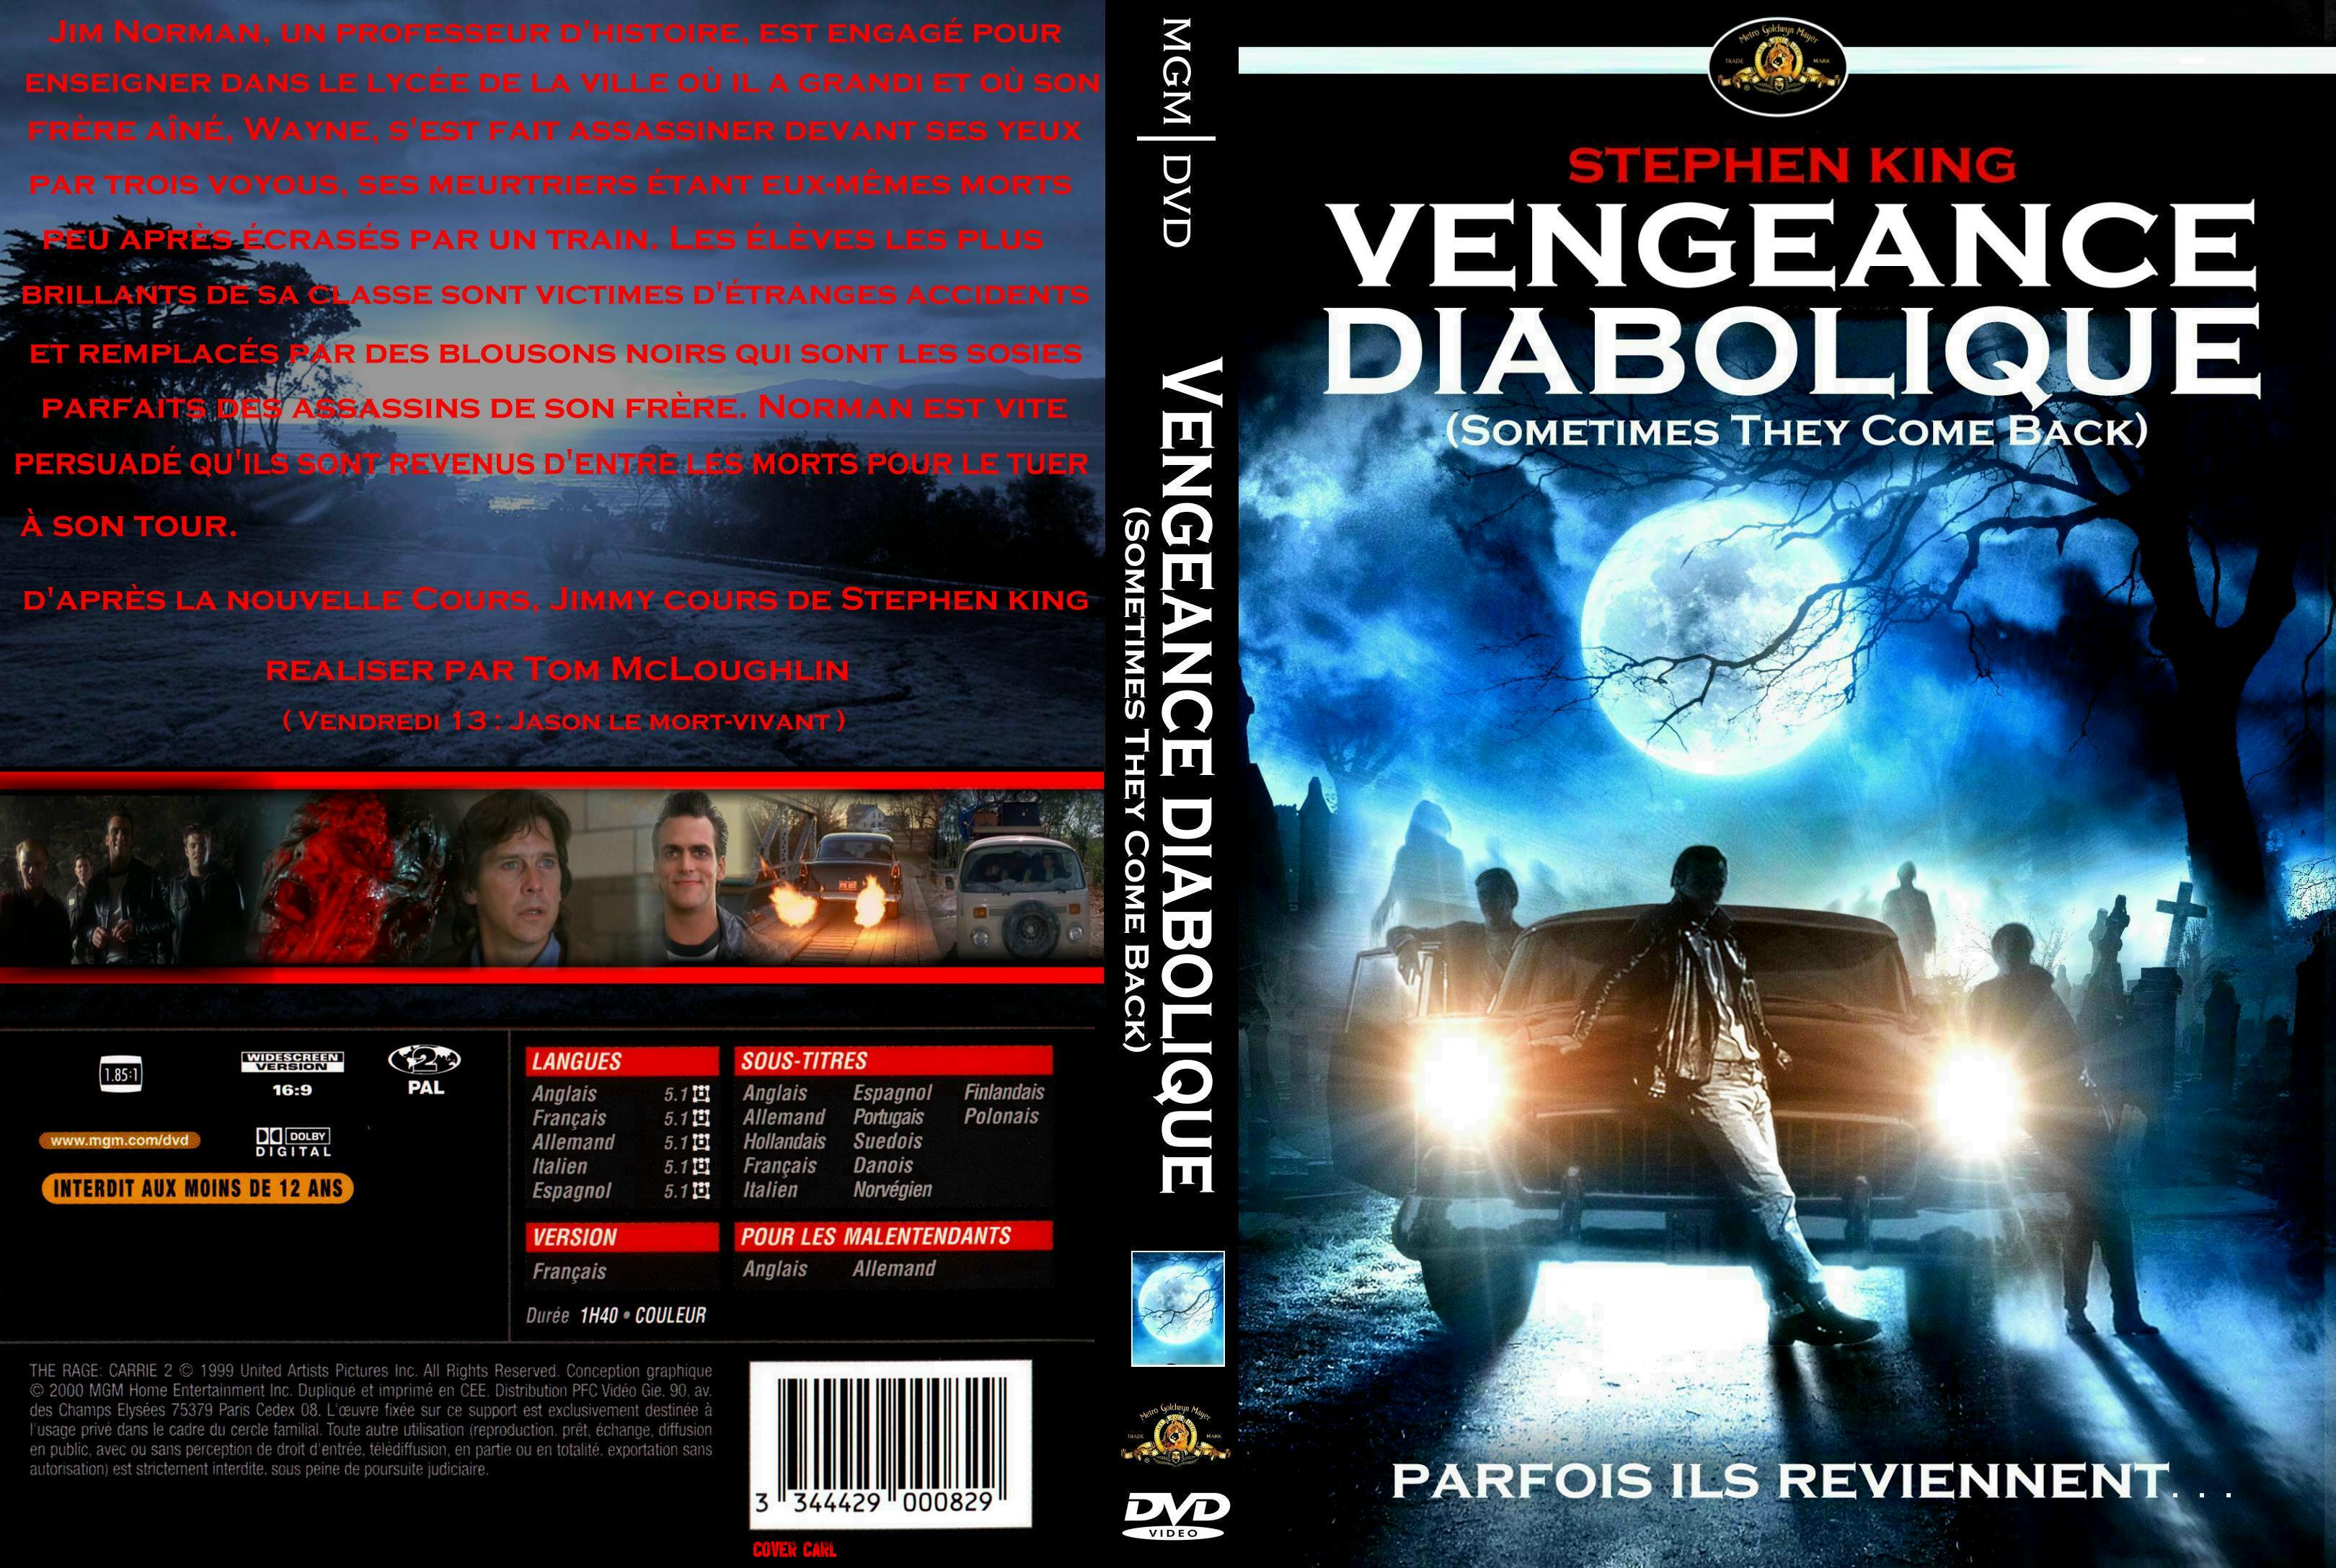 Jaquette DVD Vengeance diabolique custom v2